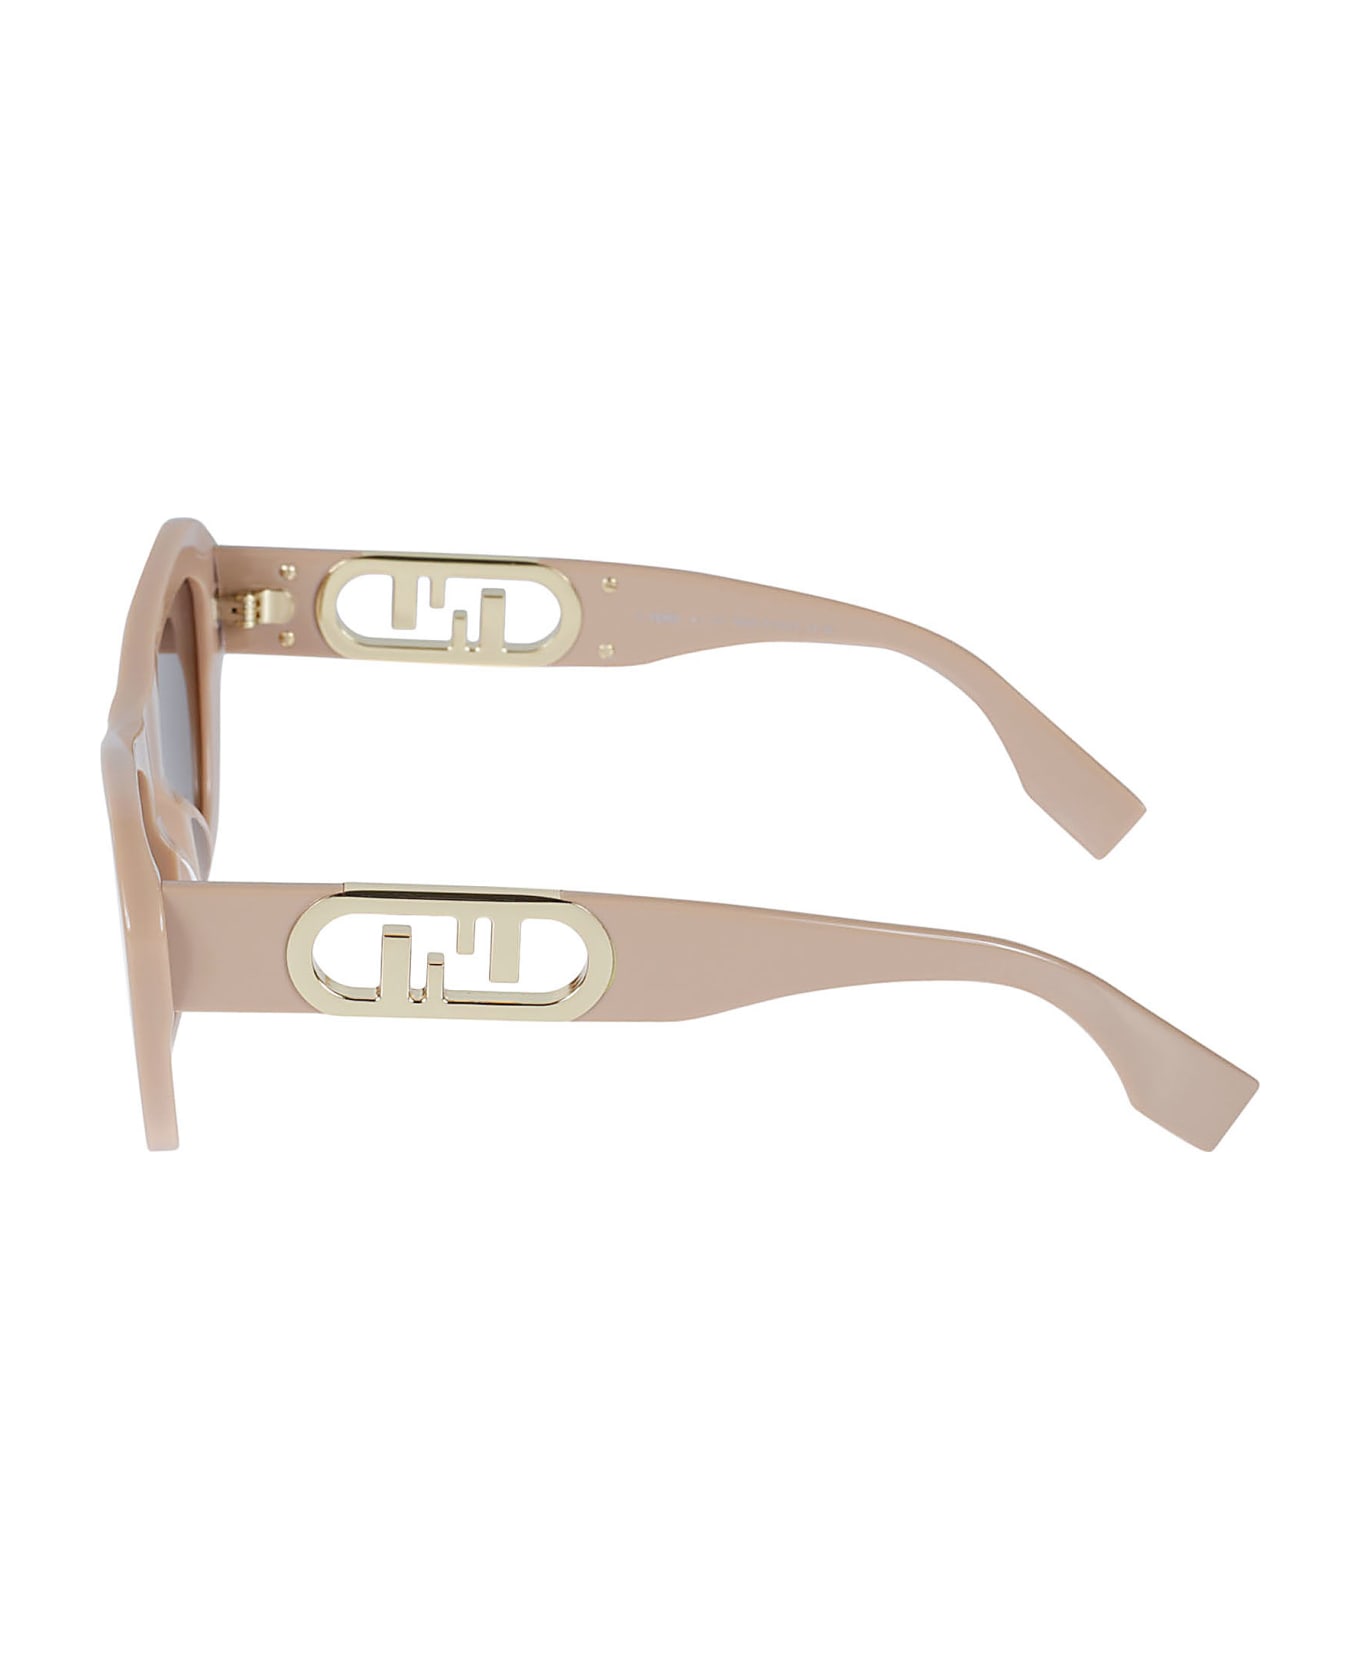 Fendi Eyewear Wayfarer radar Sunglasses - N/A